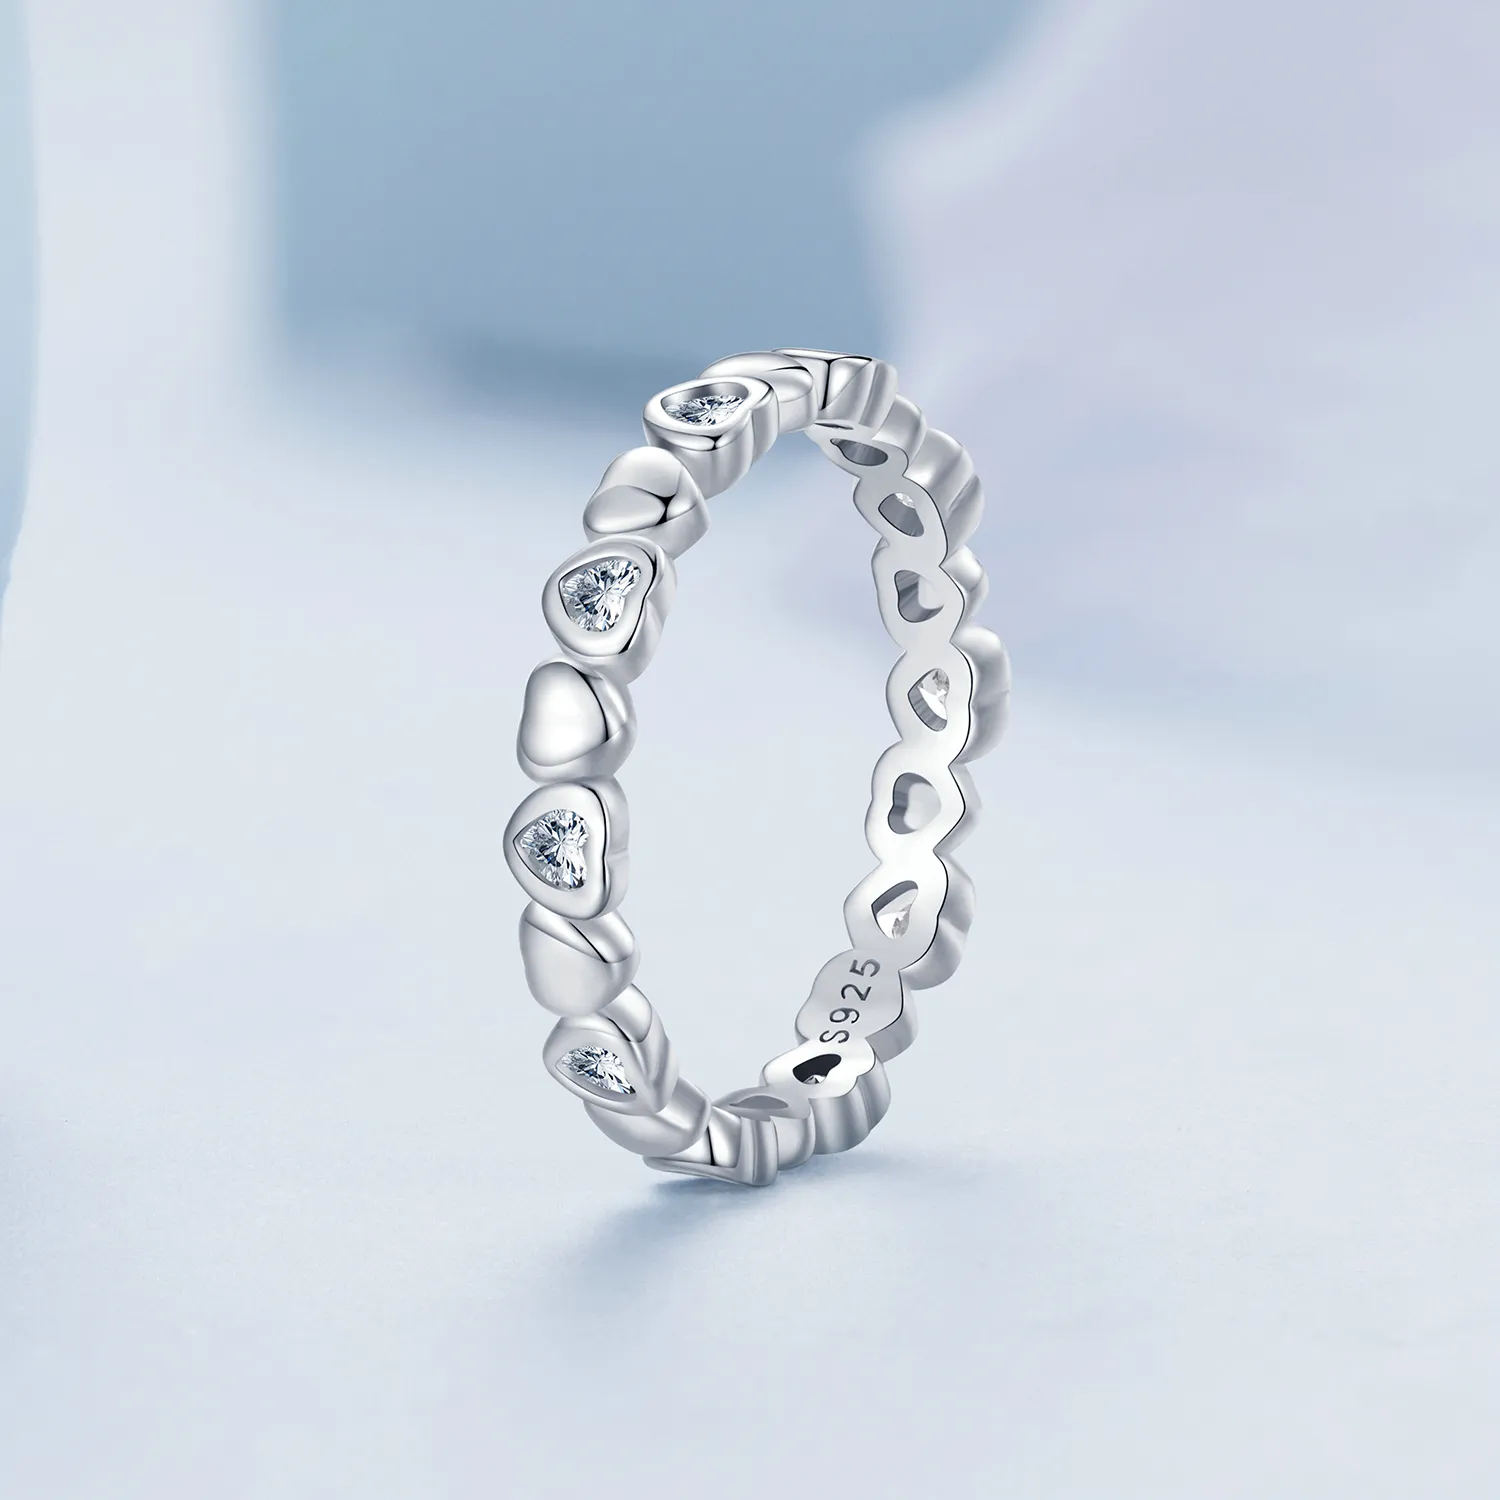 Pandora Style Hearts Ring - BSR421